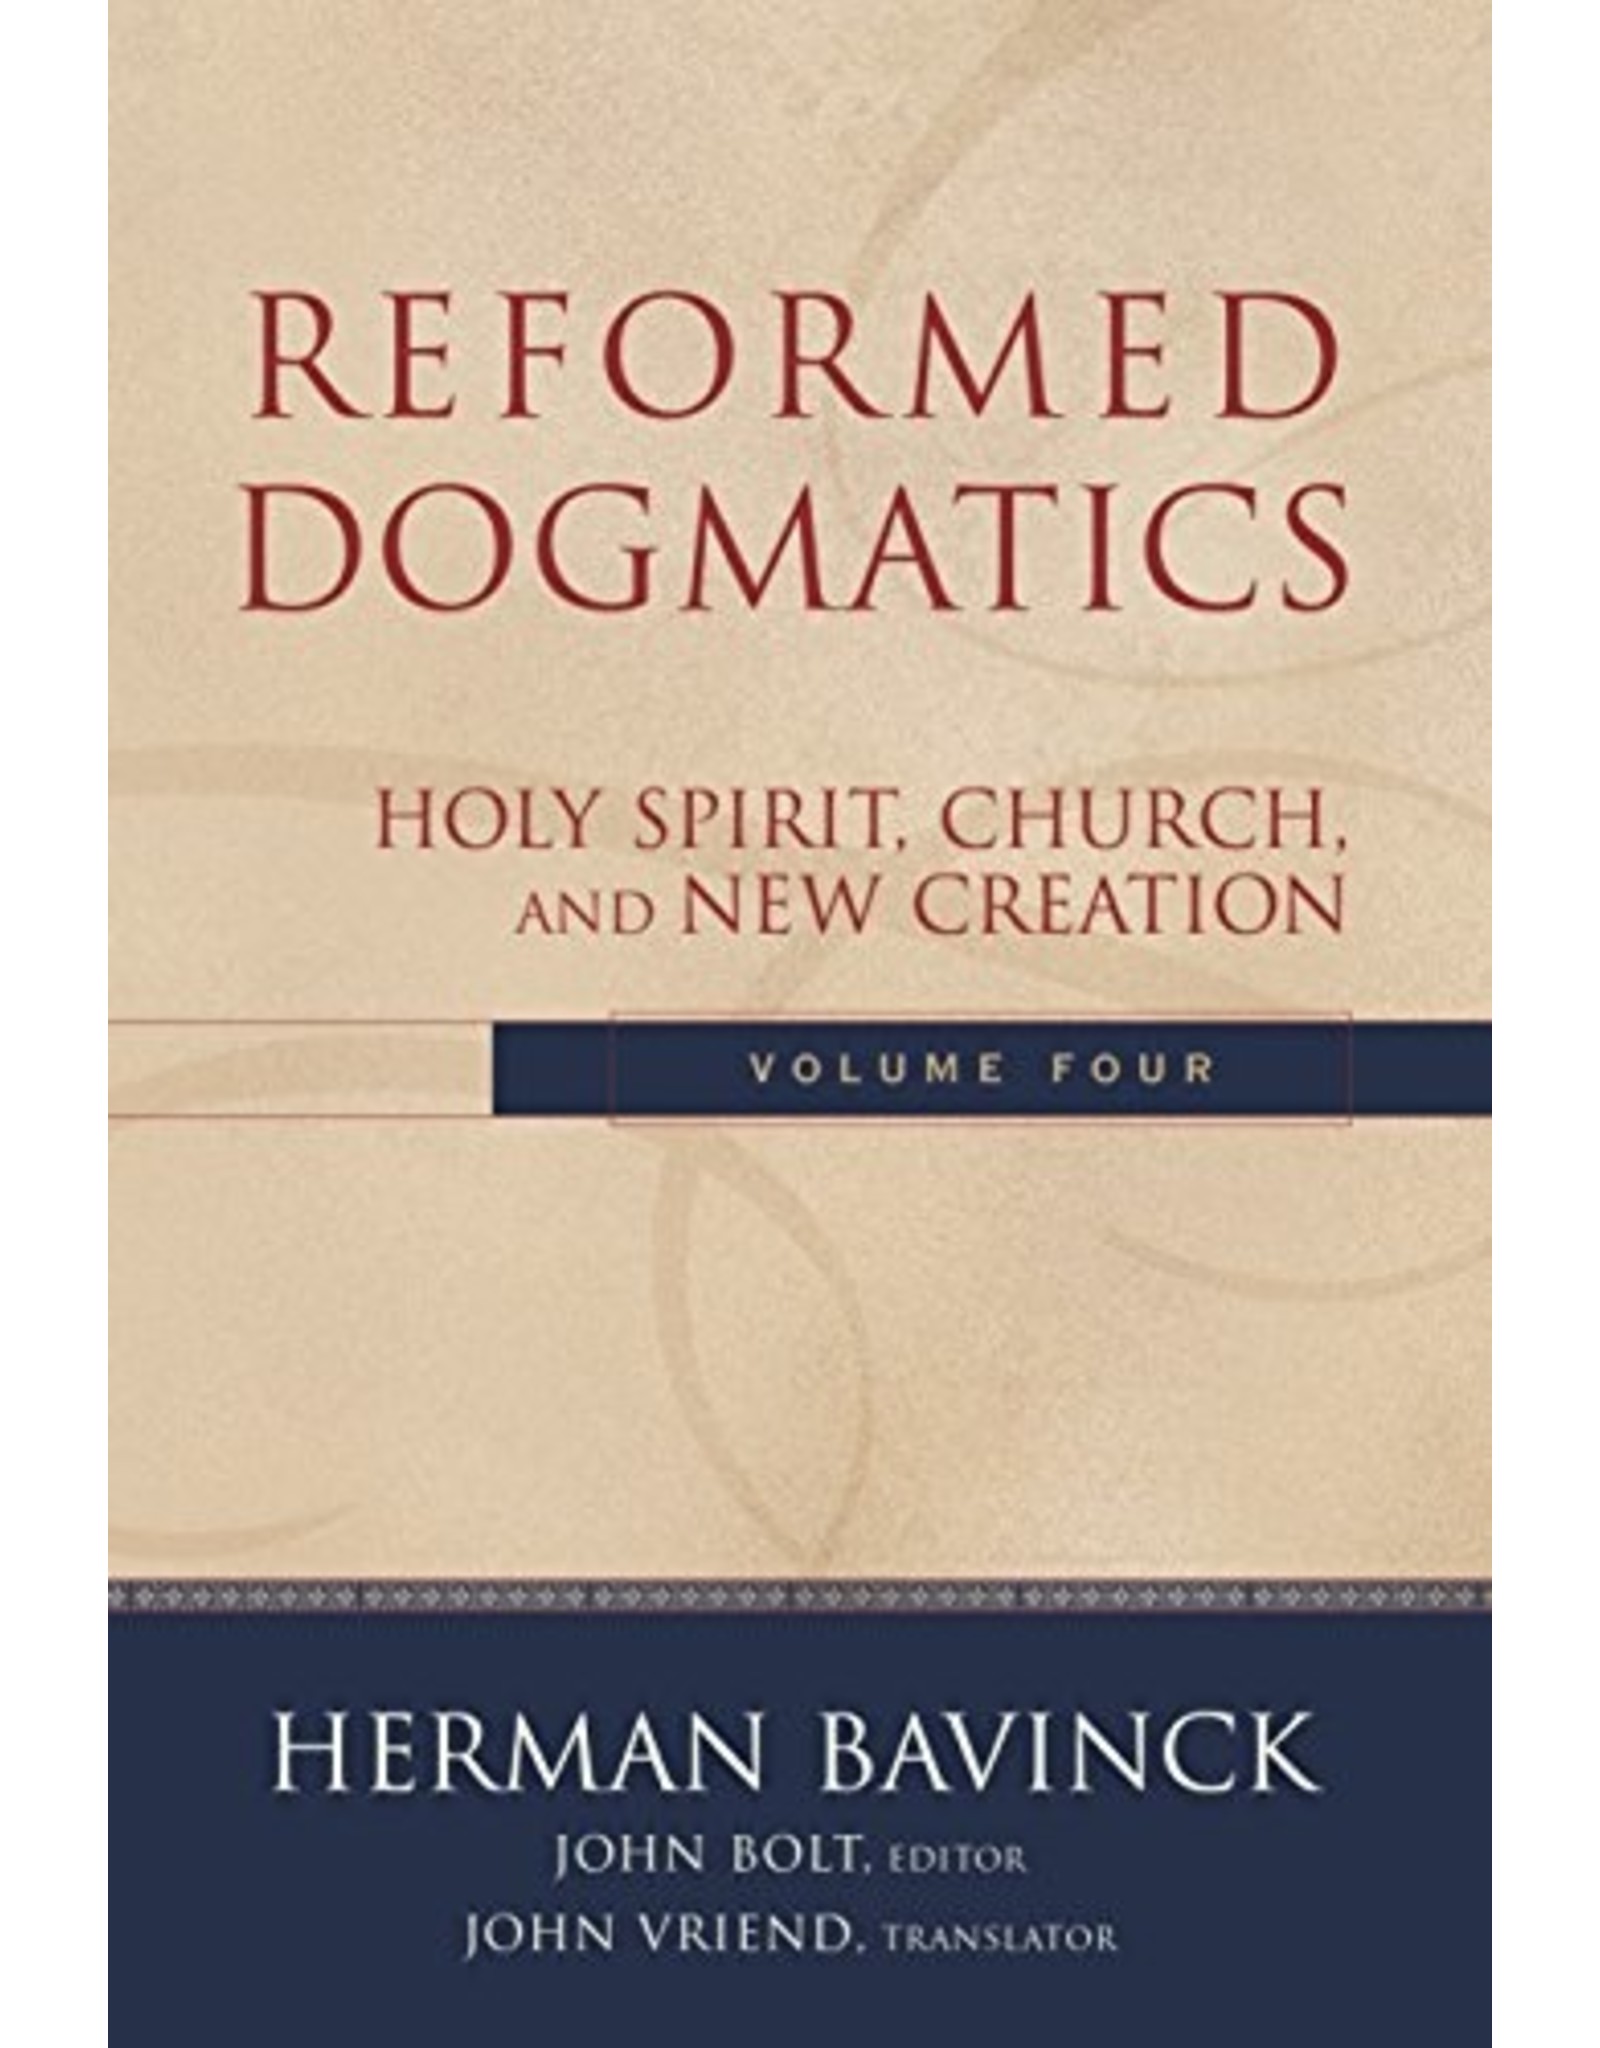 Herman Bavinck Reformed Dogmatics, Vol 1 - Prolegomena